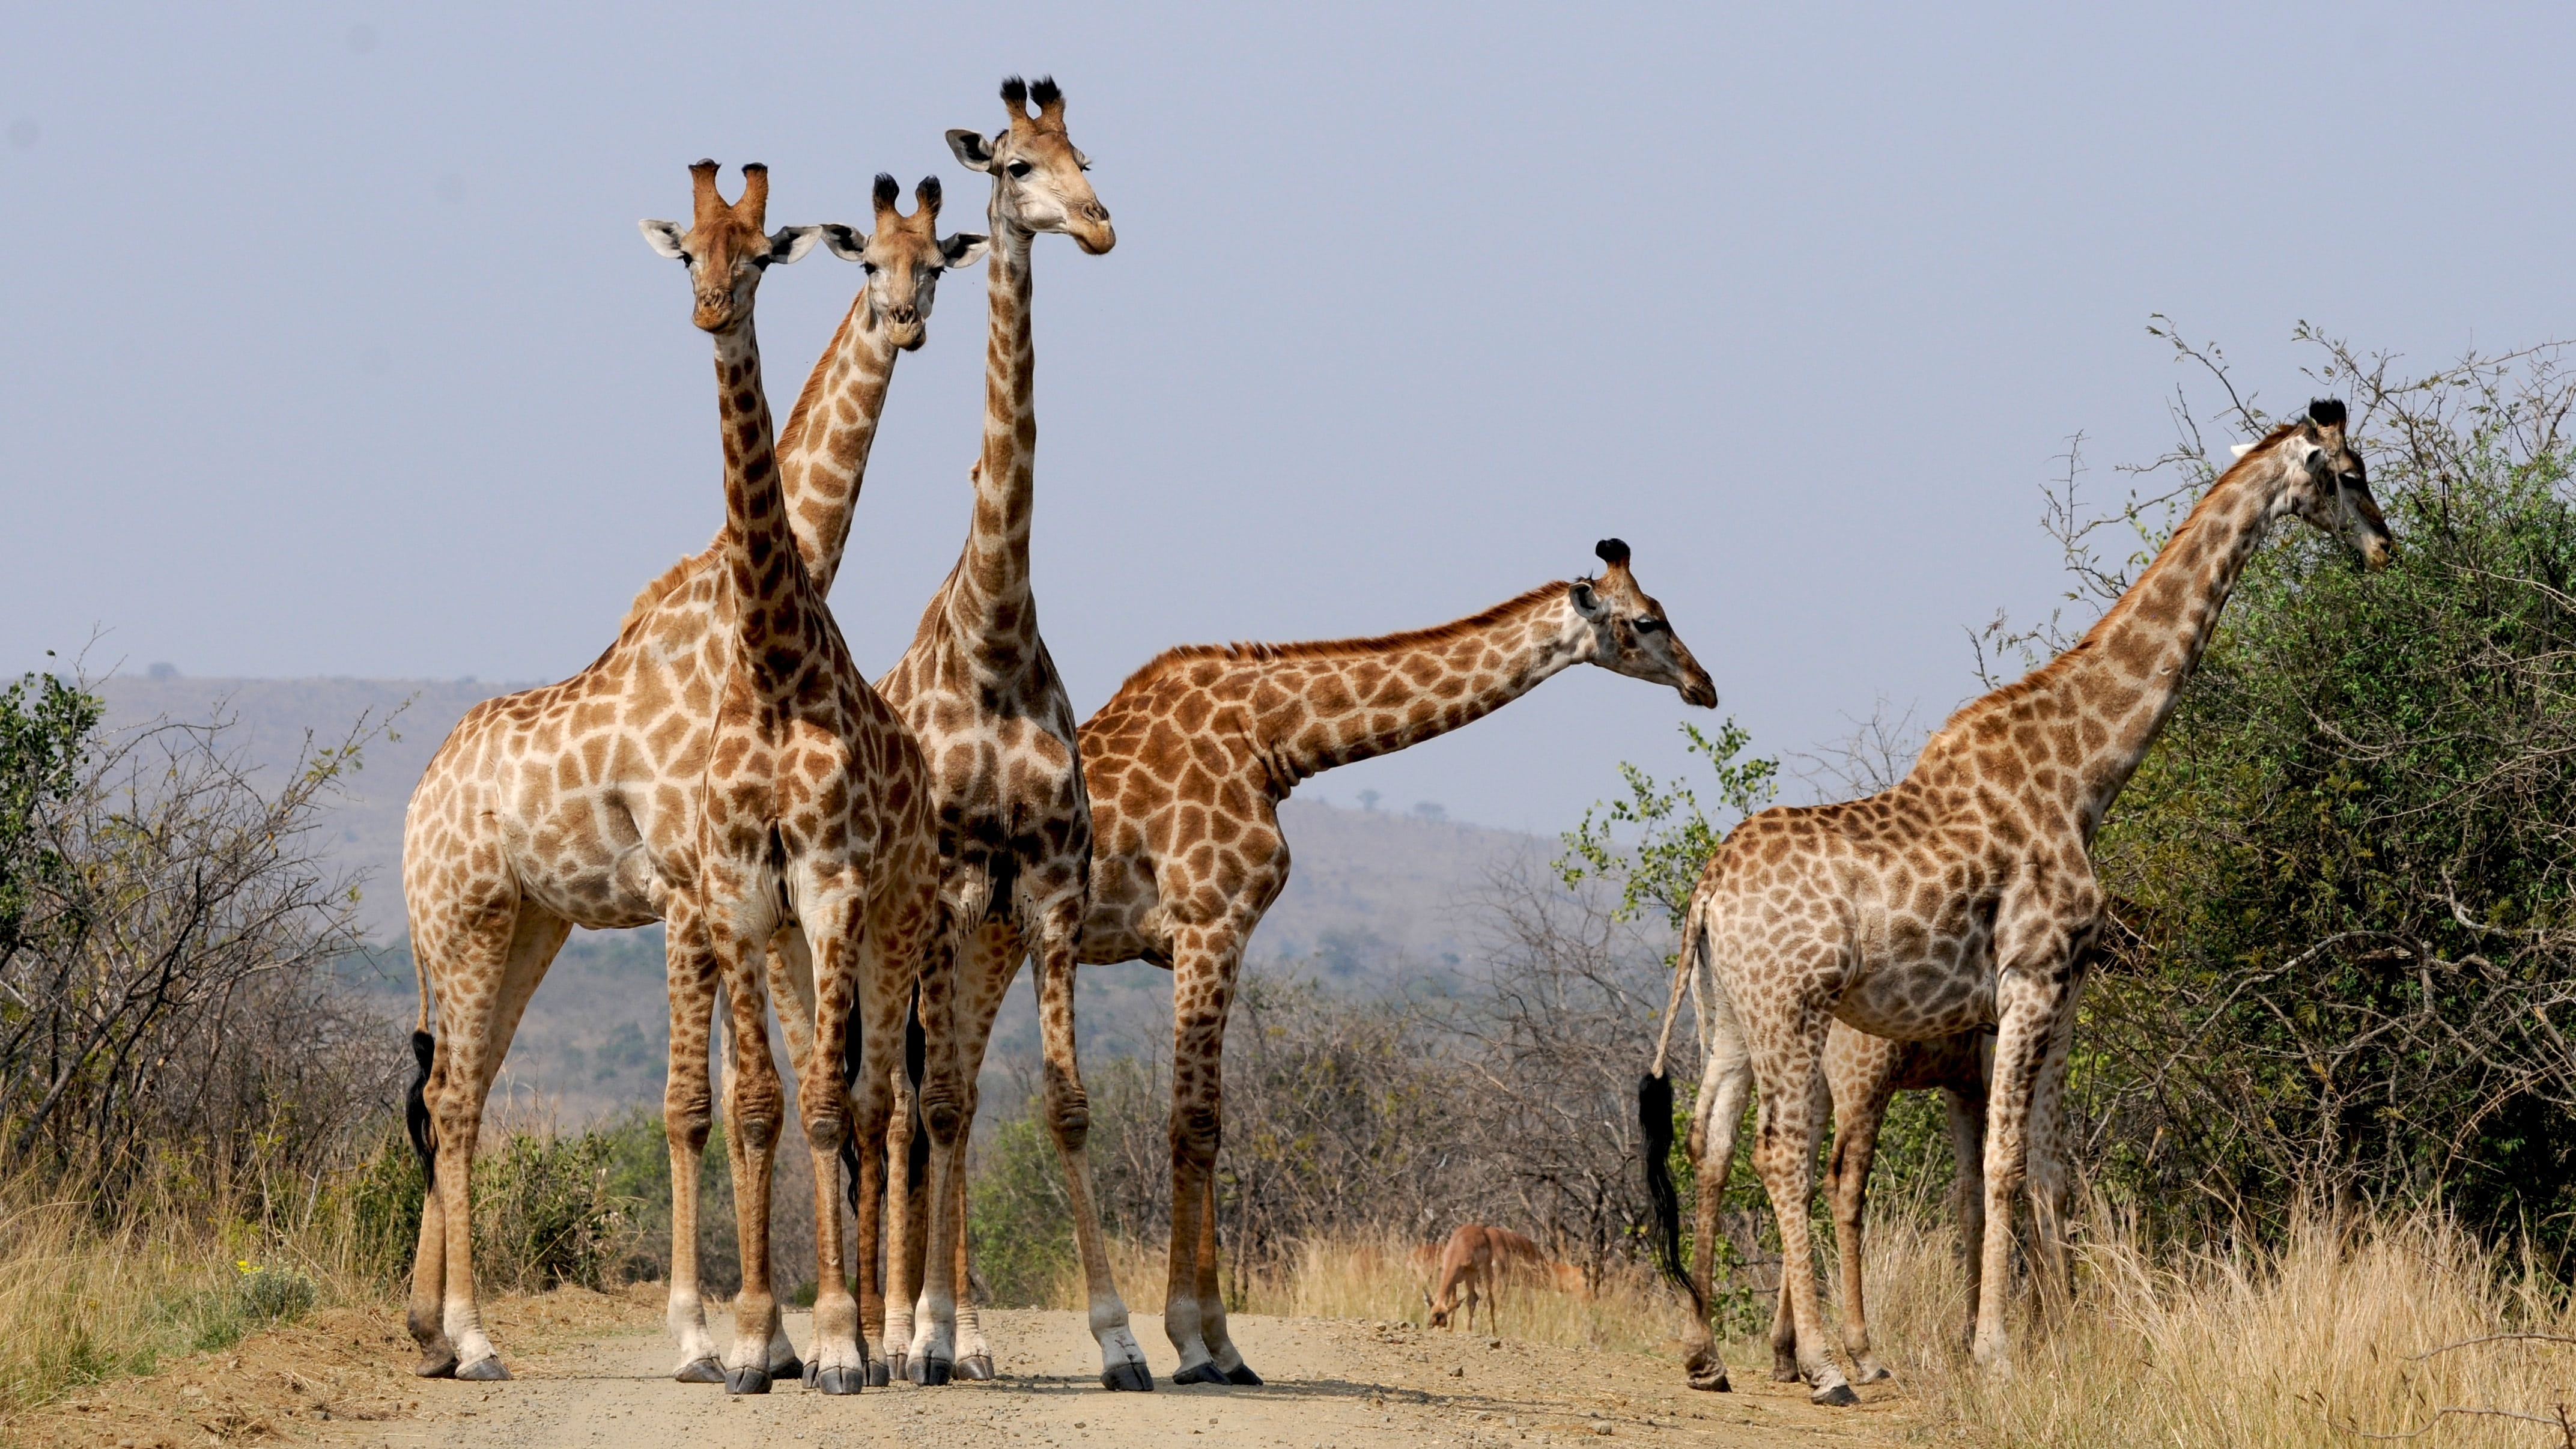 five giraffes standing near green leaves plant during daytime